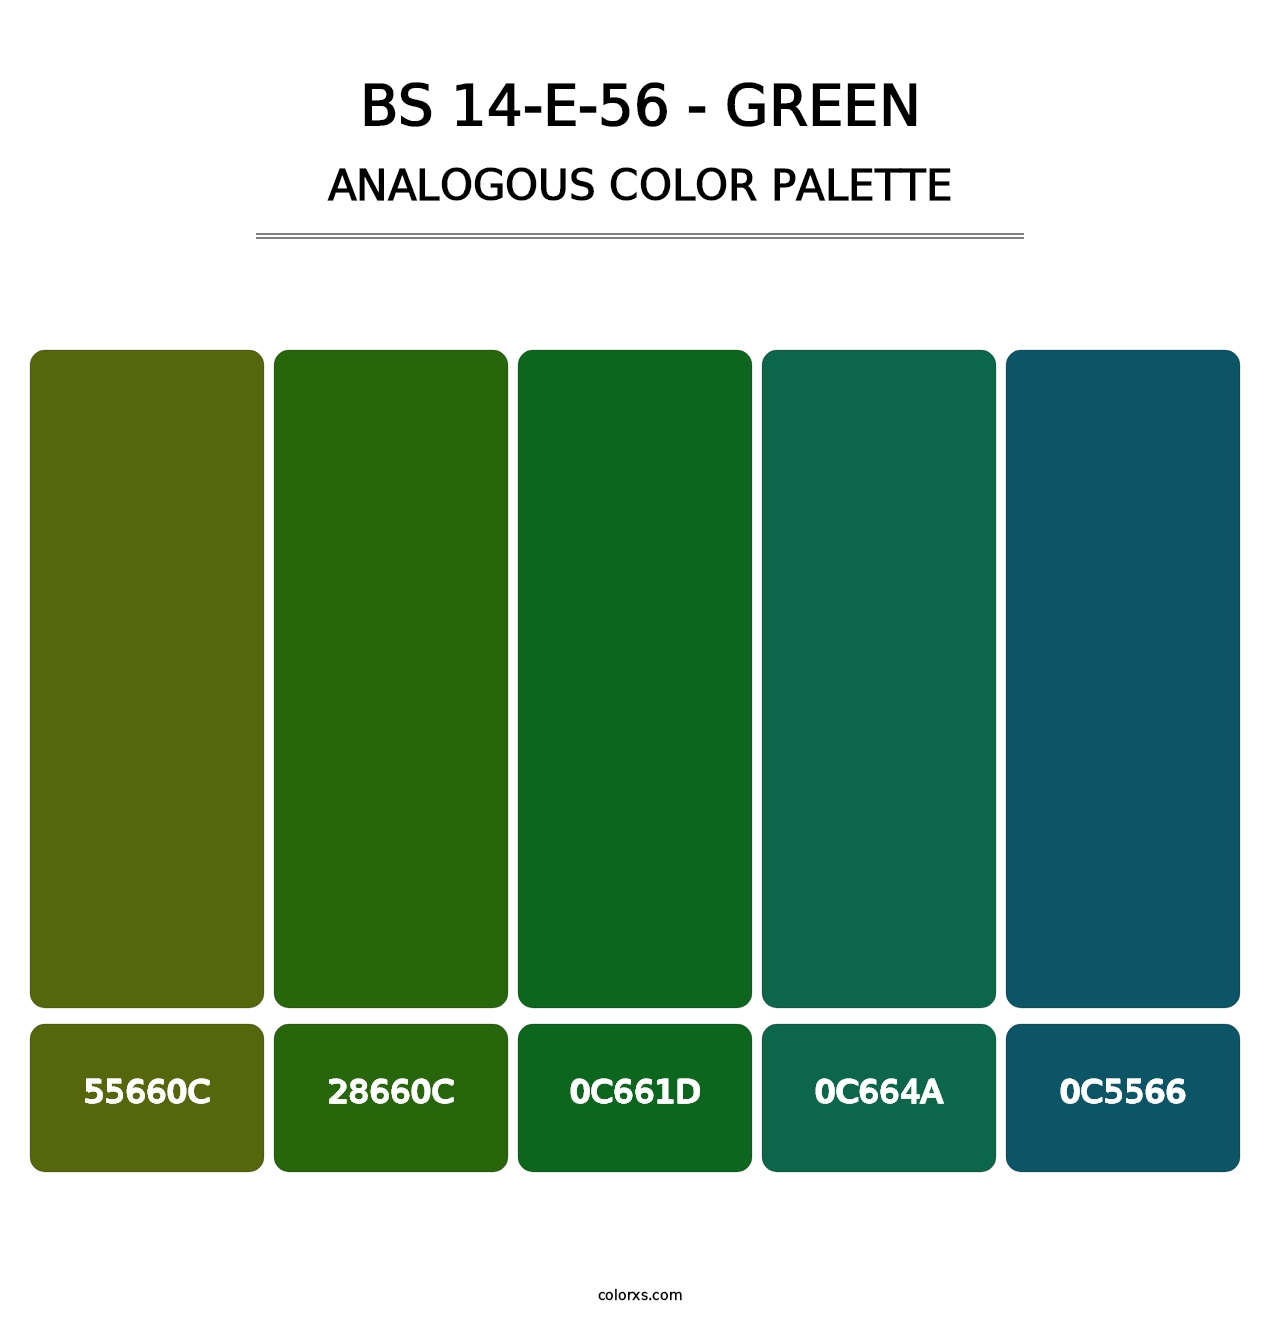 BS 14-E-56 - Green - Analogous Color Palette